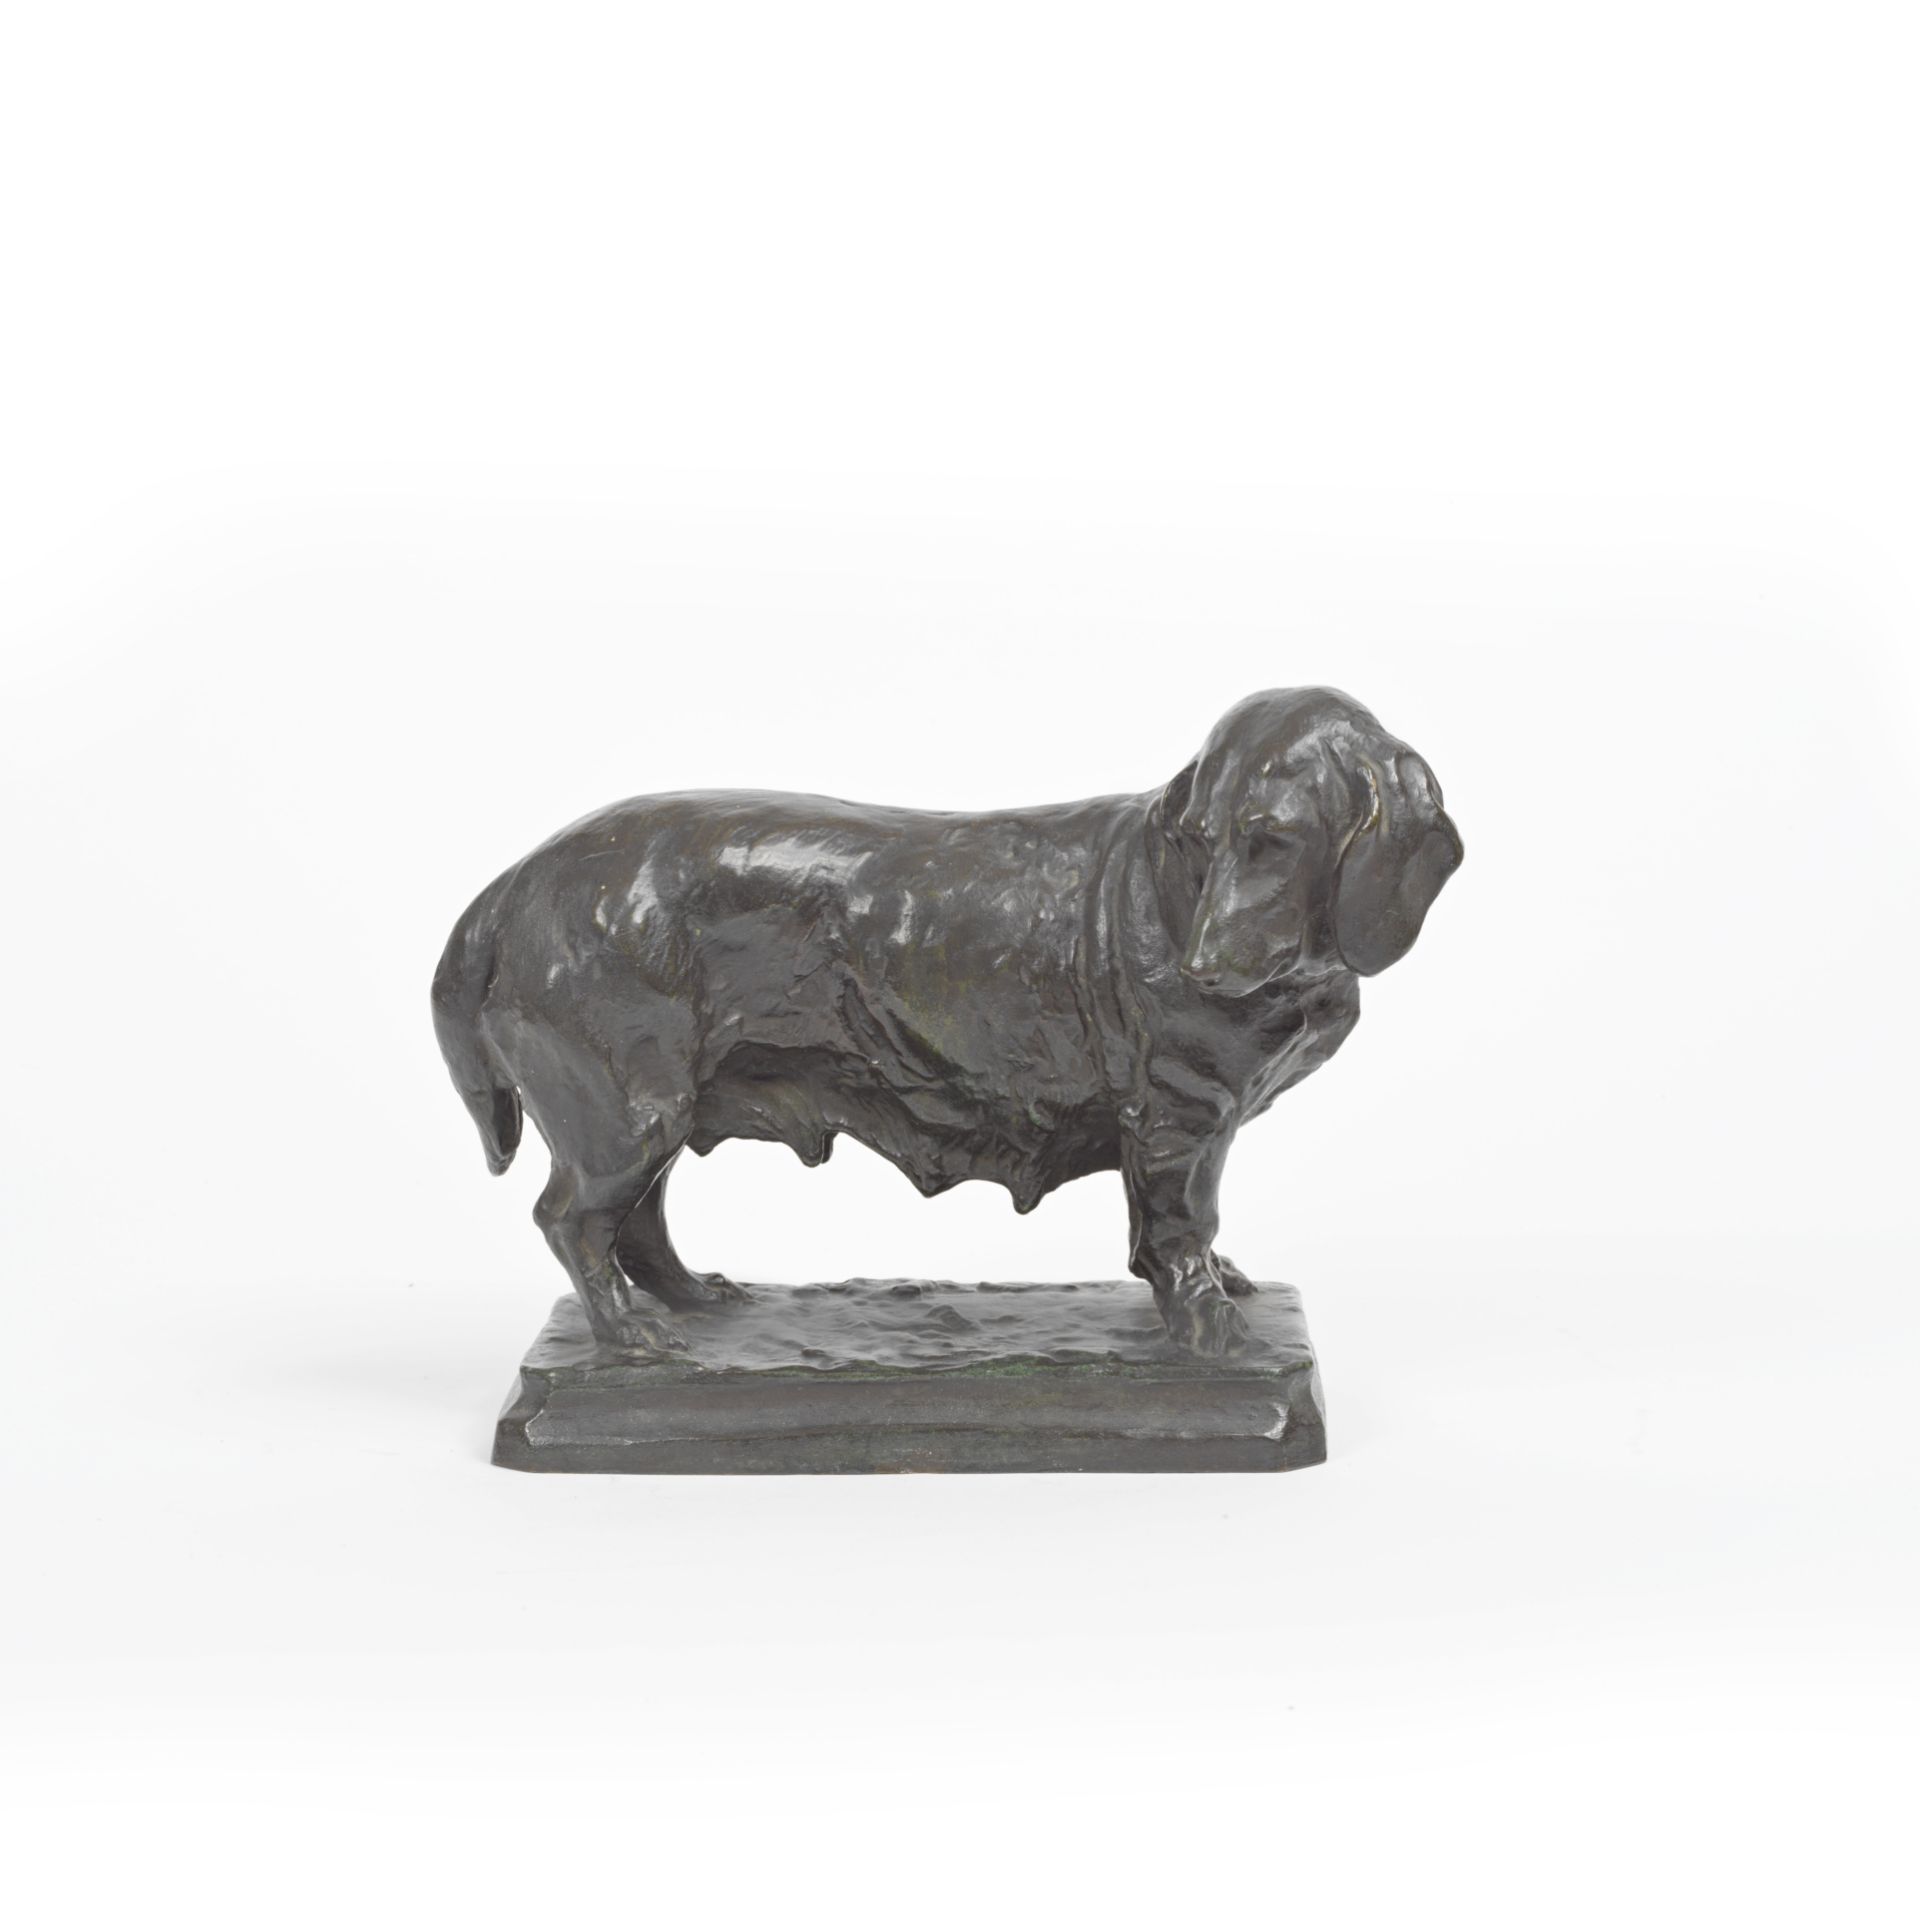 An patinated bronze model of a basset hound